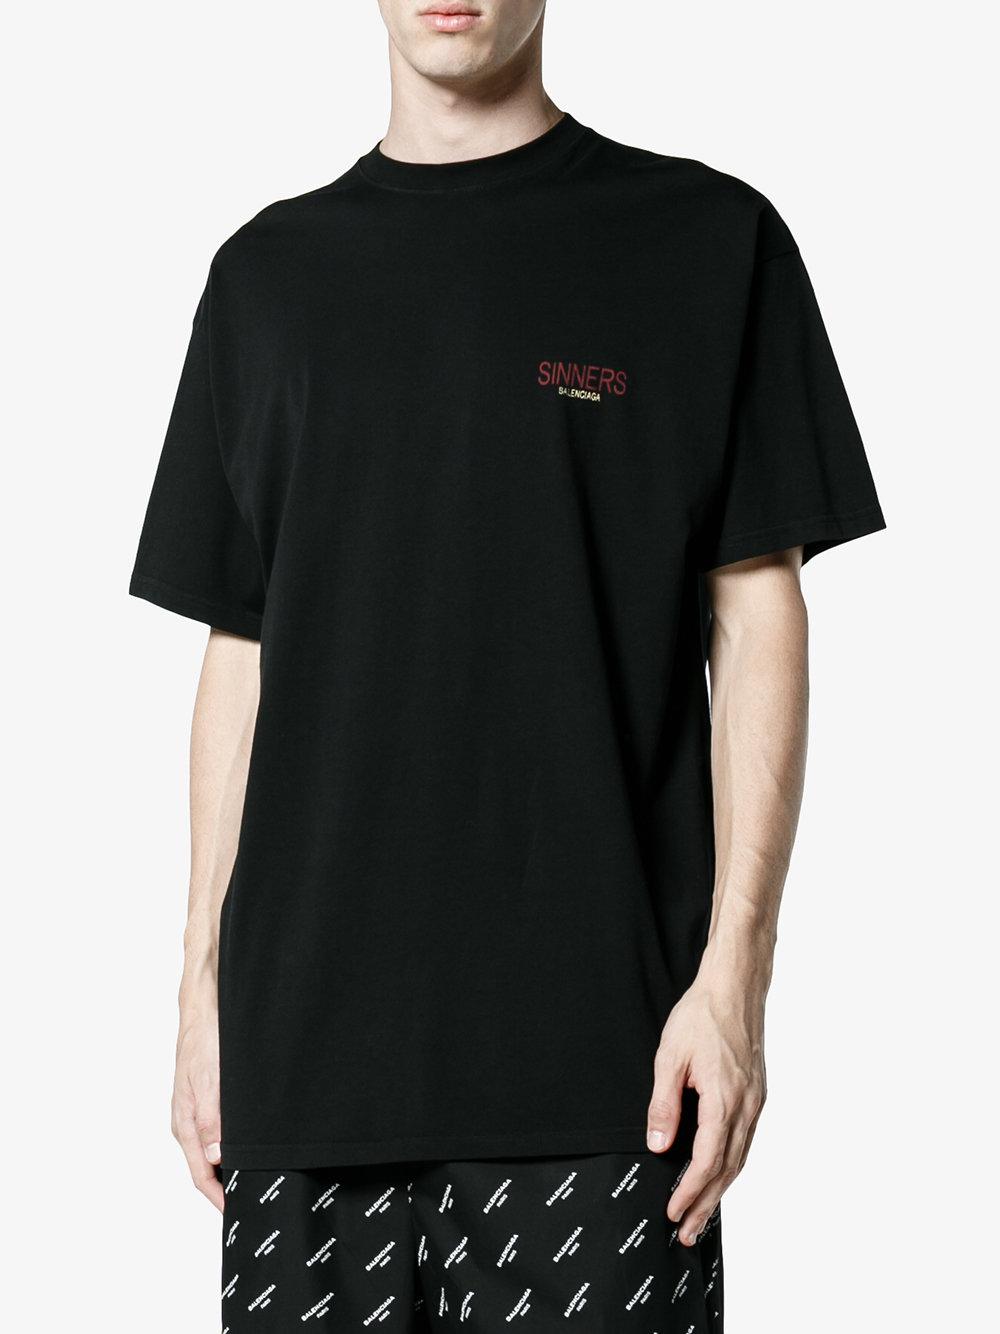 Balenciaga Sinners T-shirt in Black for Men | Lyst